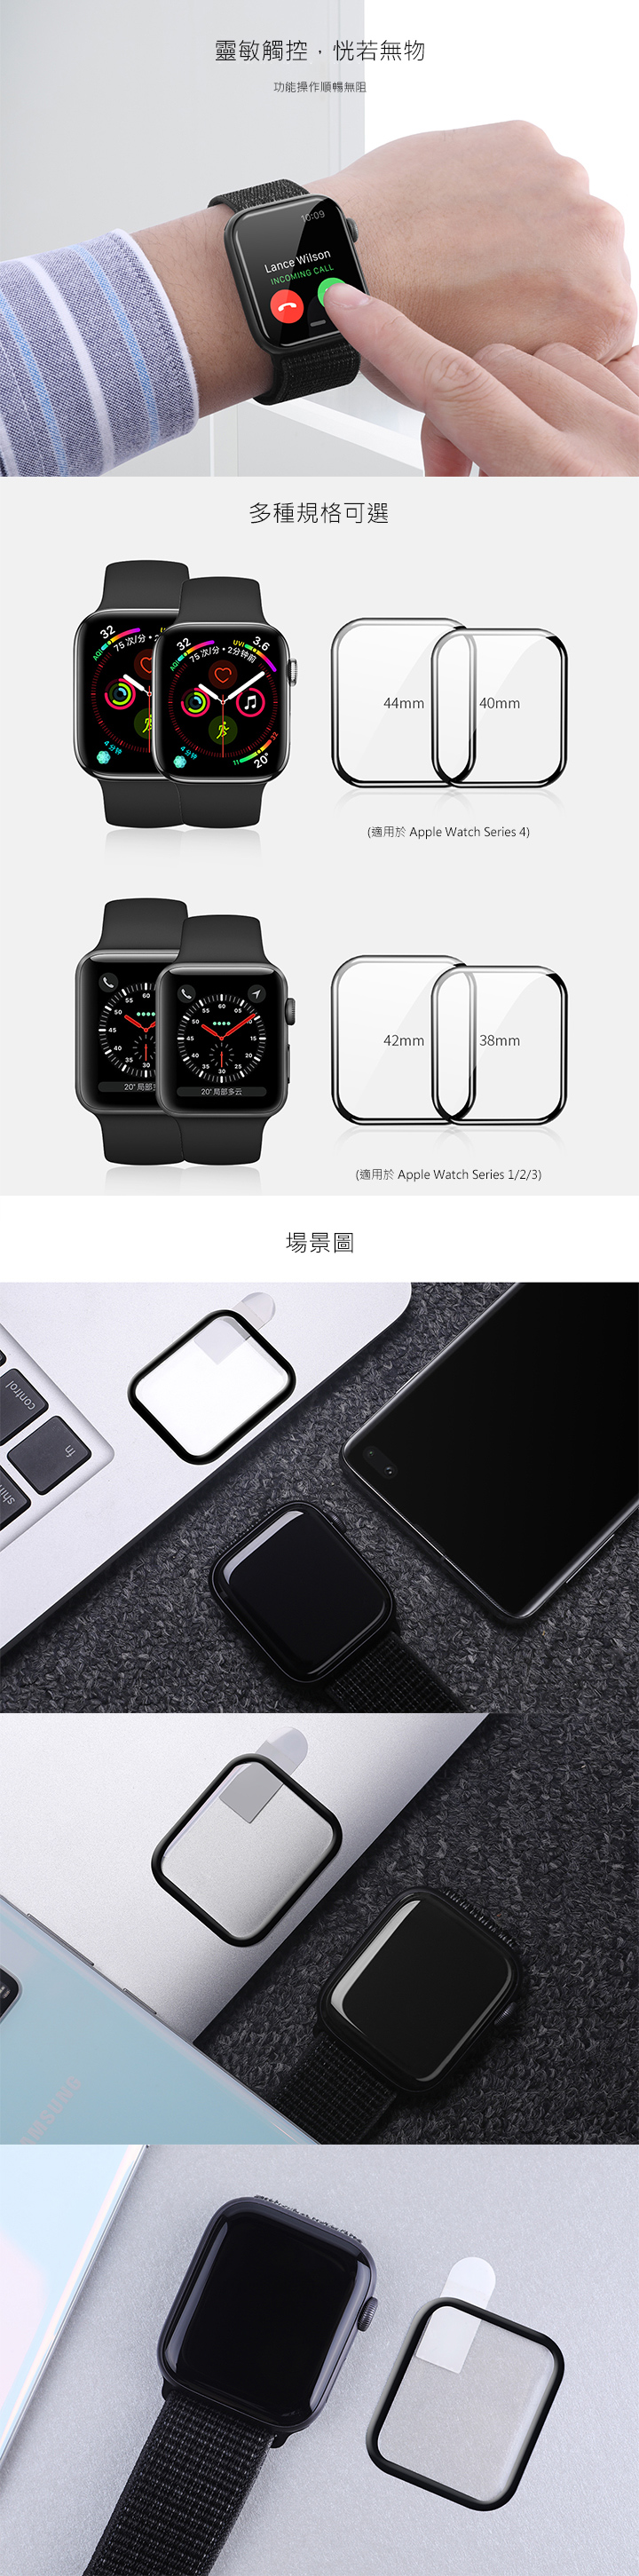 NILLKIN Apple Watch S4 (44mm) 3D AW 滿版玻璃貼 鋼化玻璃Dark Horse 黑碼